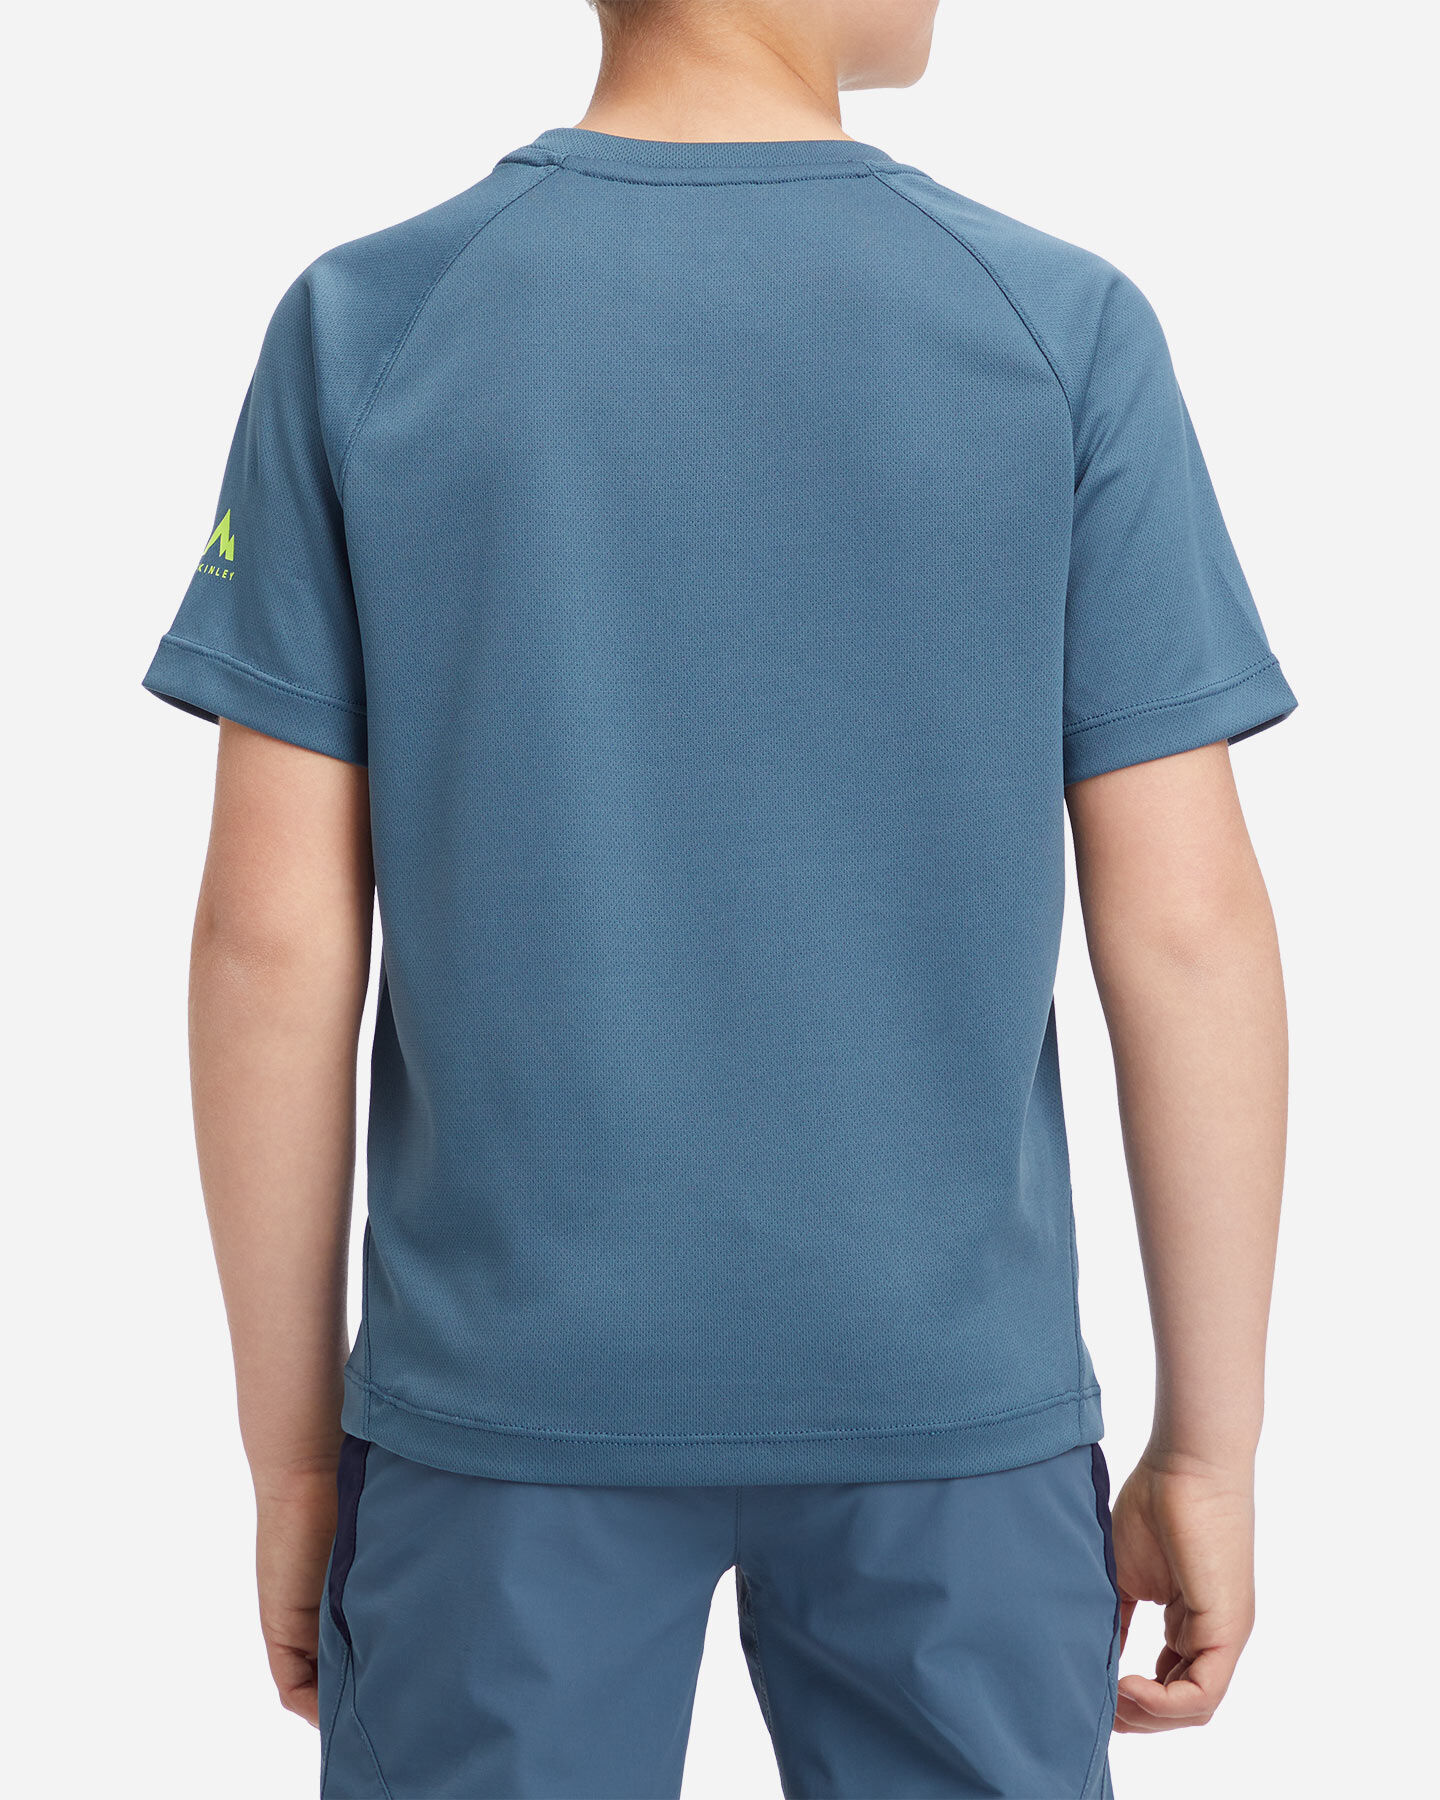  T-Shirt MCKINLEY ASTER JR S5637800|509|128 scatto 2